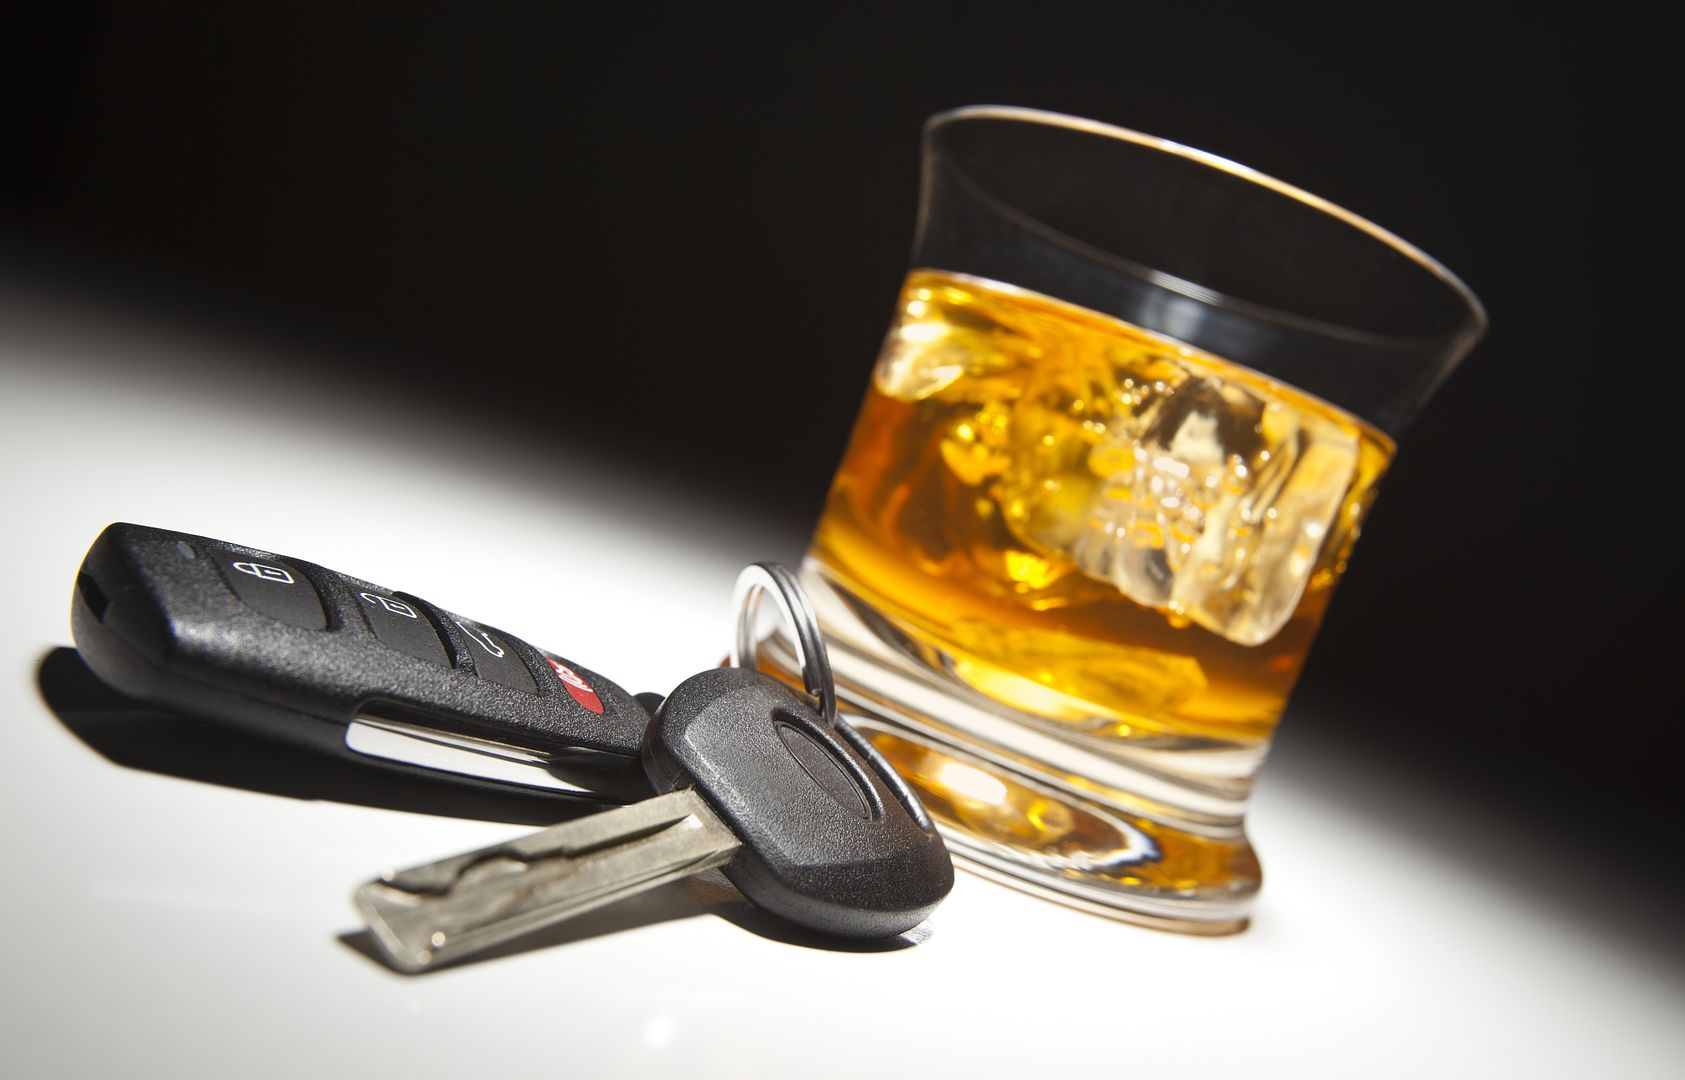 Car Keys and Liquor photo 1436887600_st.-louis-drunk-driving-lawyer_zpsg3orgfyb.jpg